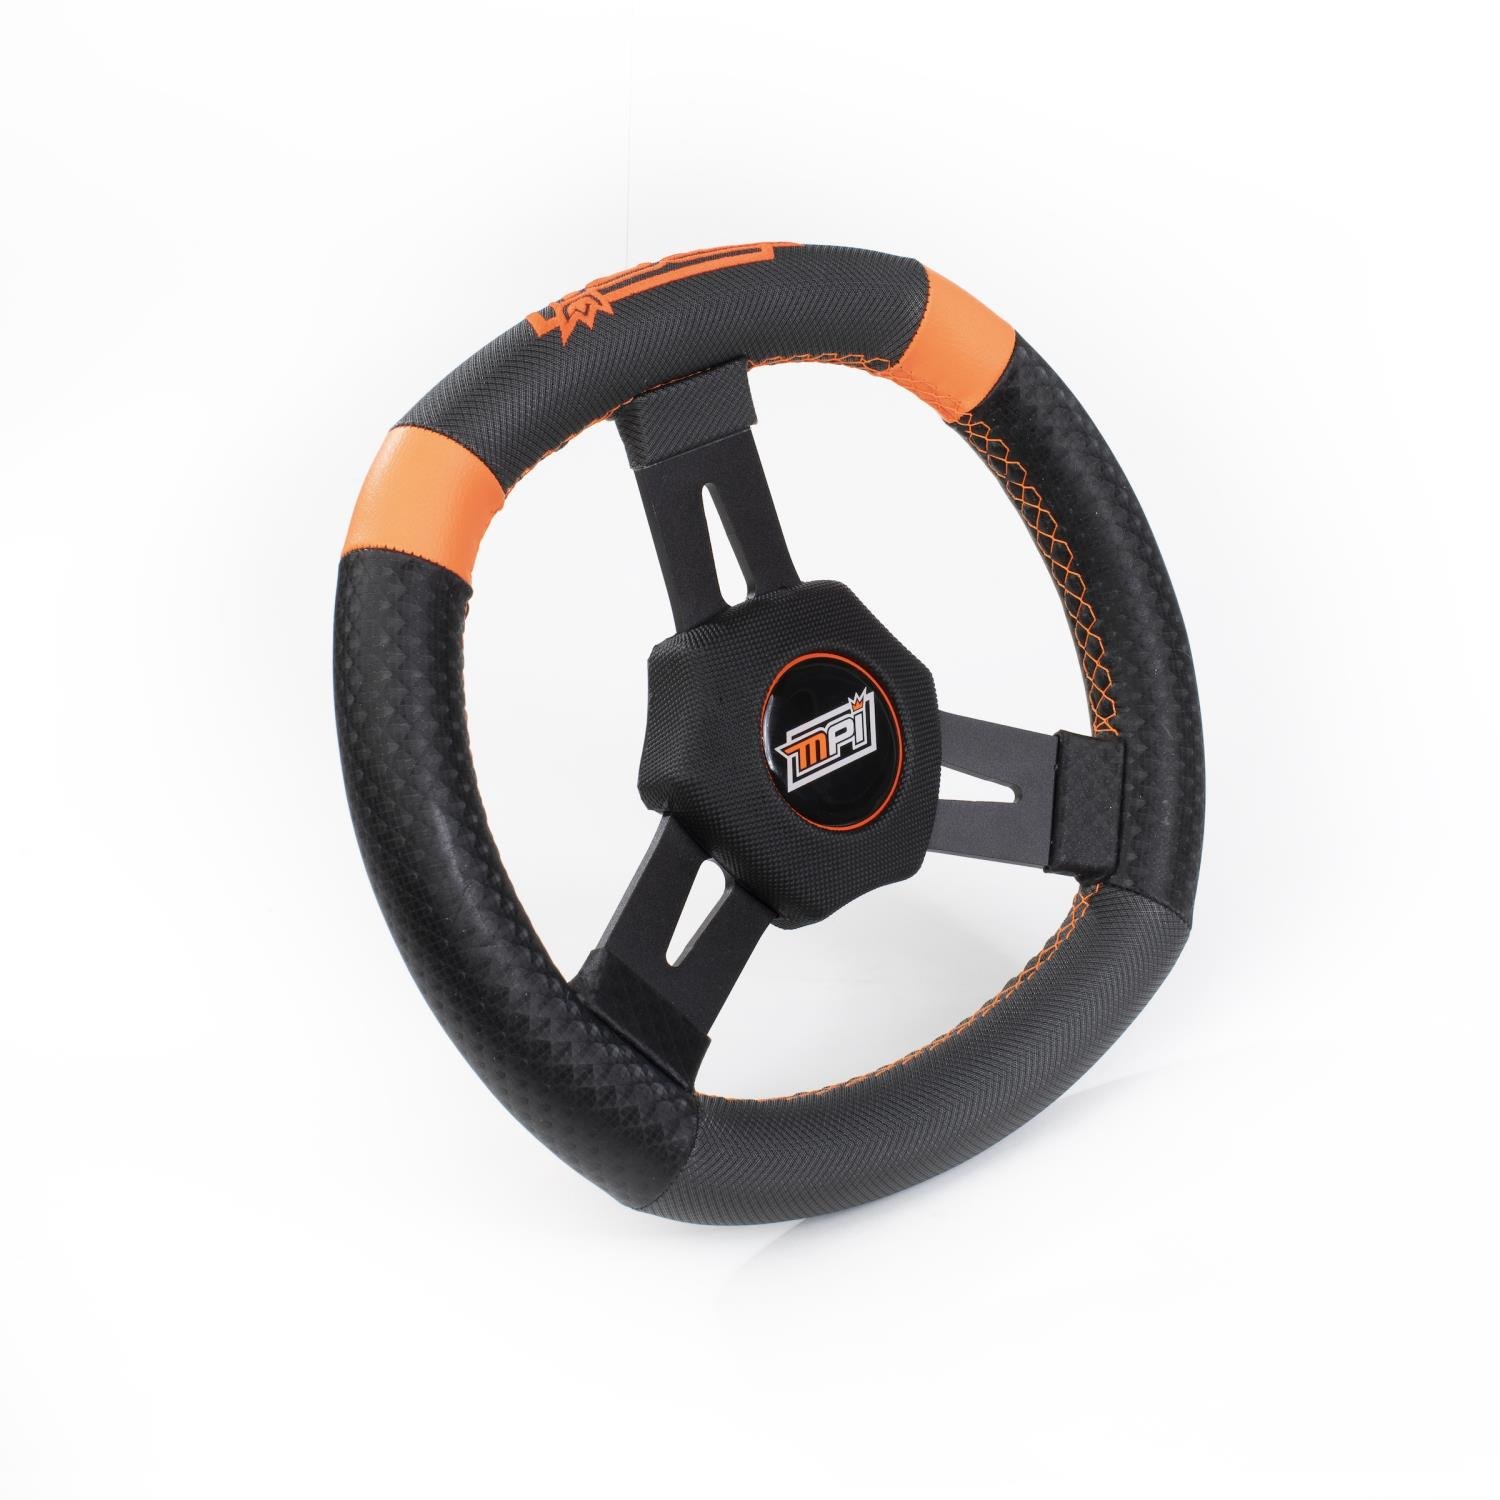 Quarter Midget Steering Wheel 11" Diameter